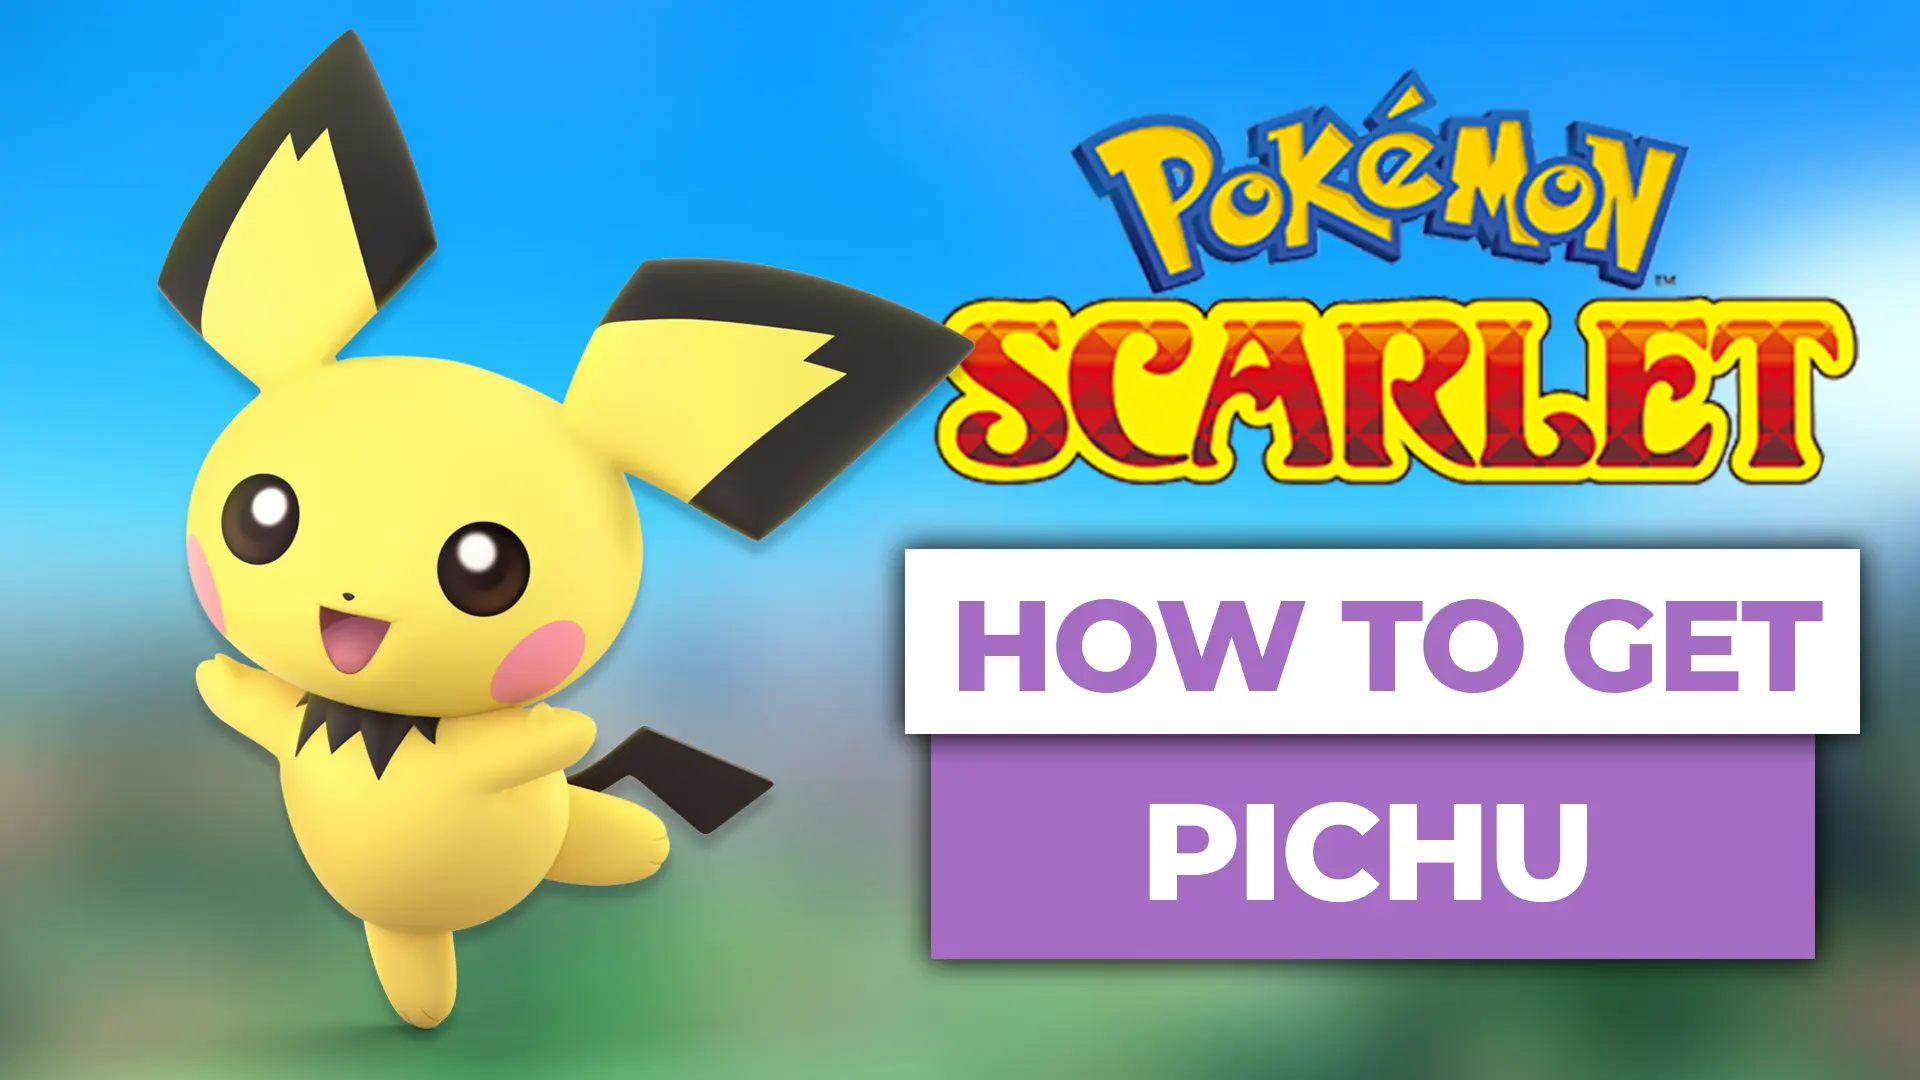 Pikachu location: Where to catch Pikachu Pokemon Scarlet and Violet